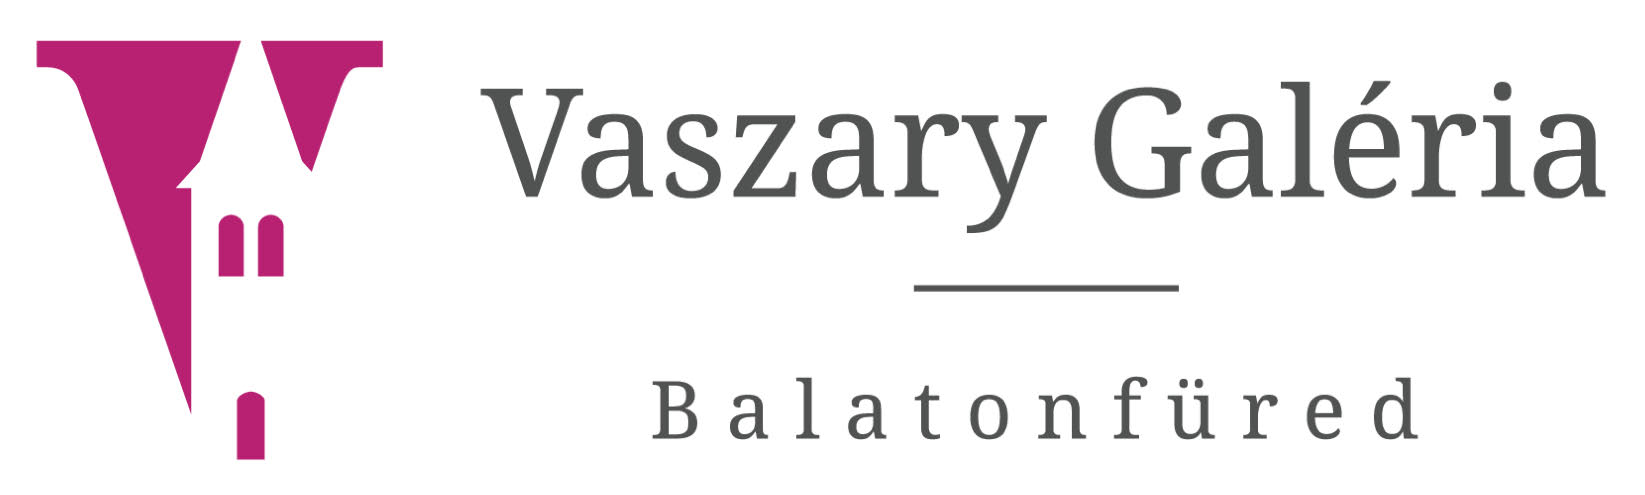 Vaszary Galéria - Balatonfüred